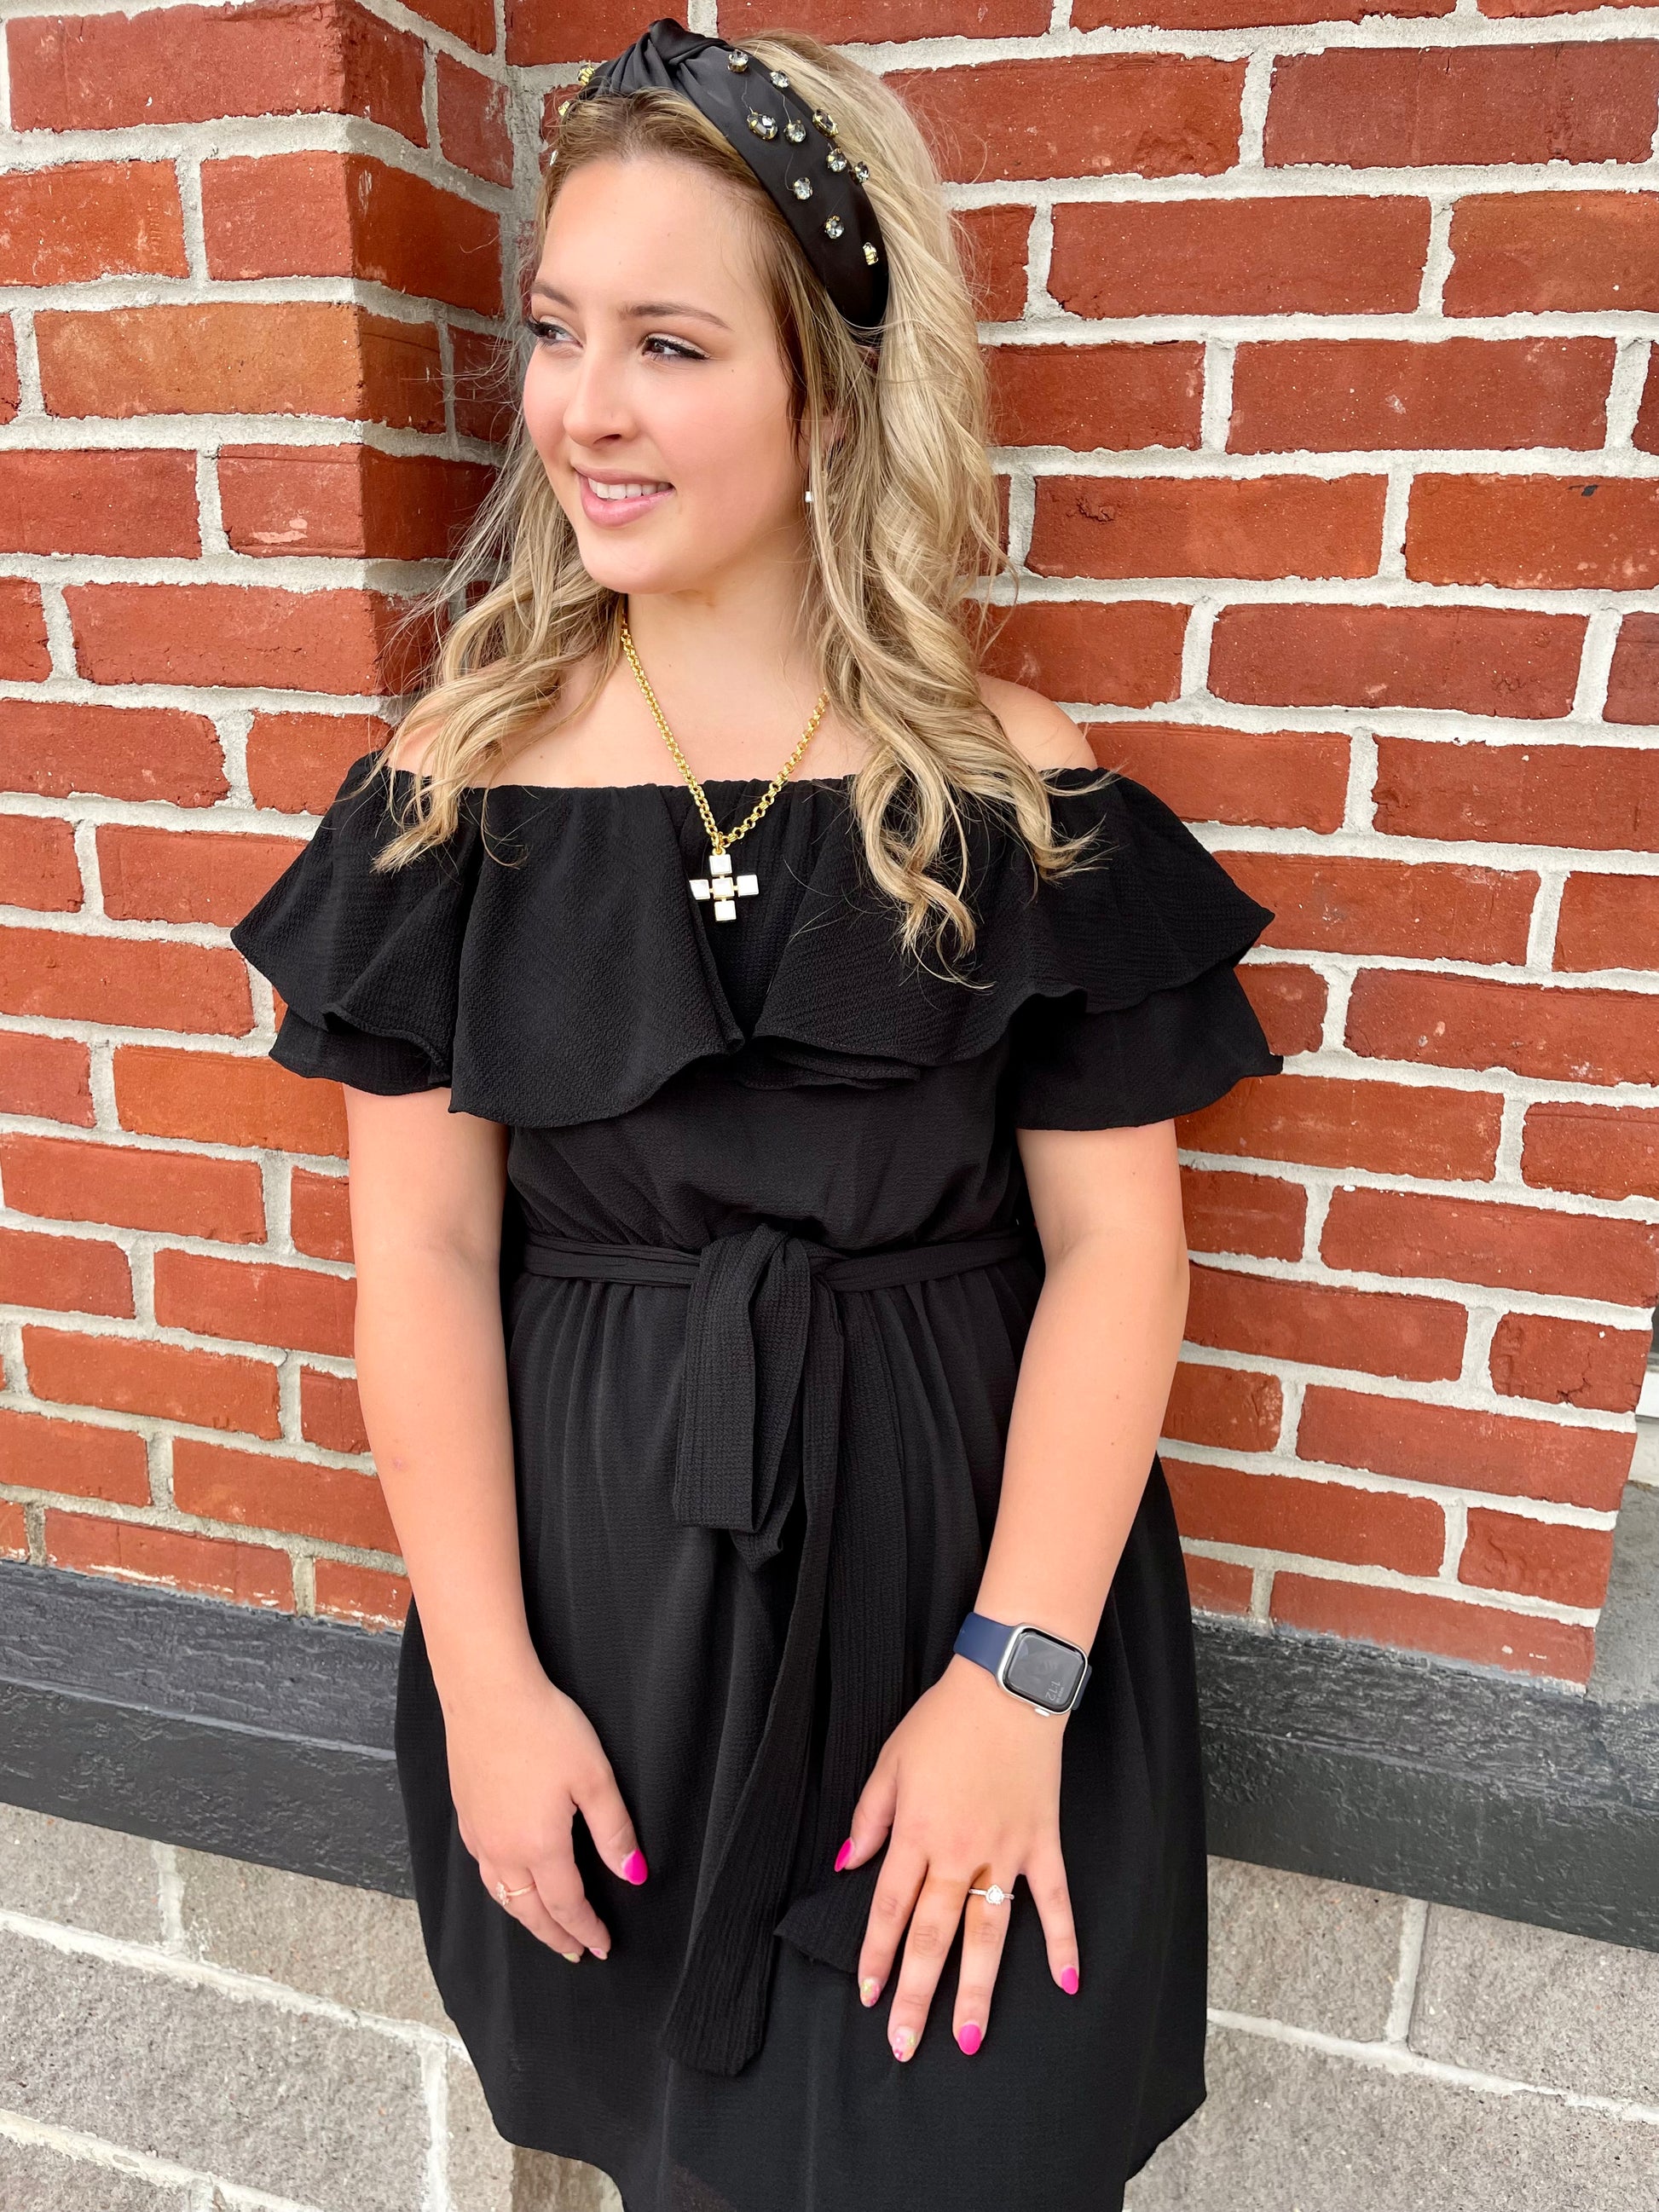 a girl in a black dress standing in front of a brick wall wearing MOP Cross Earrings by Weisinger Designs.